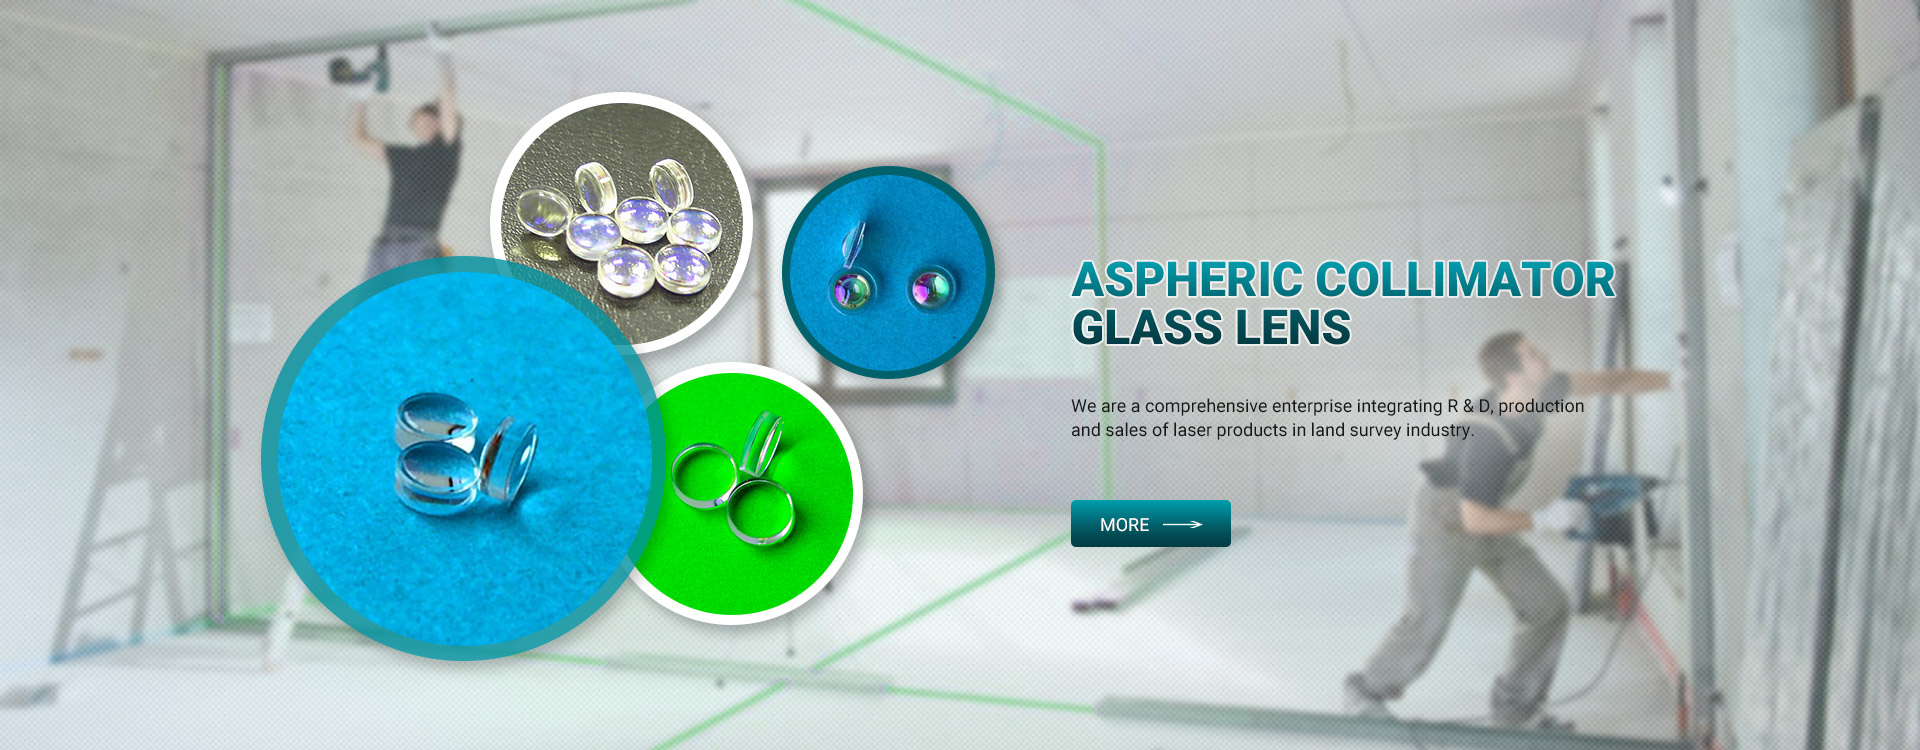 Aspheric Collimator Glass Lens